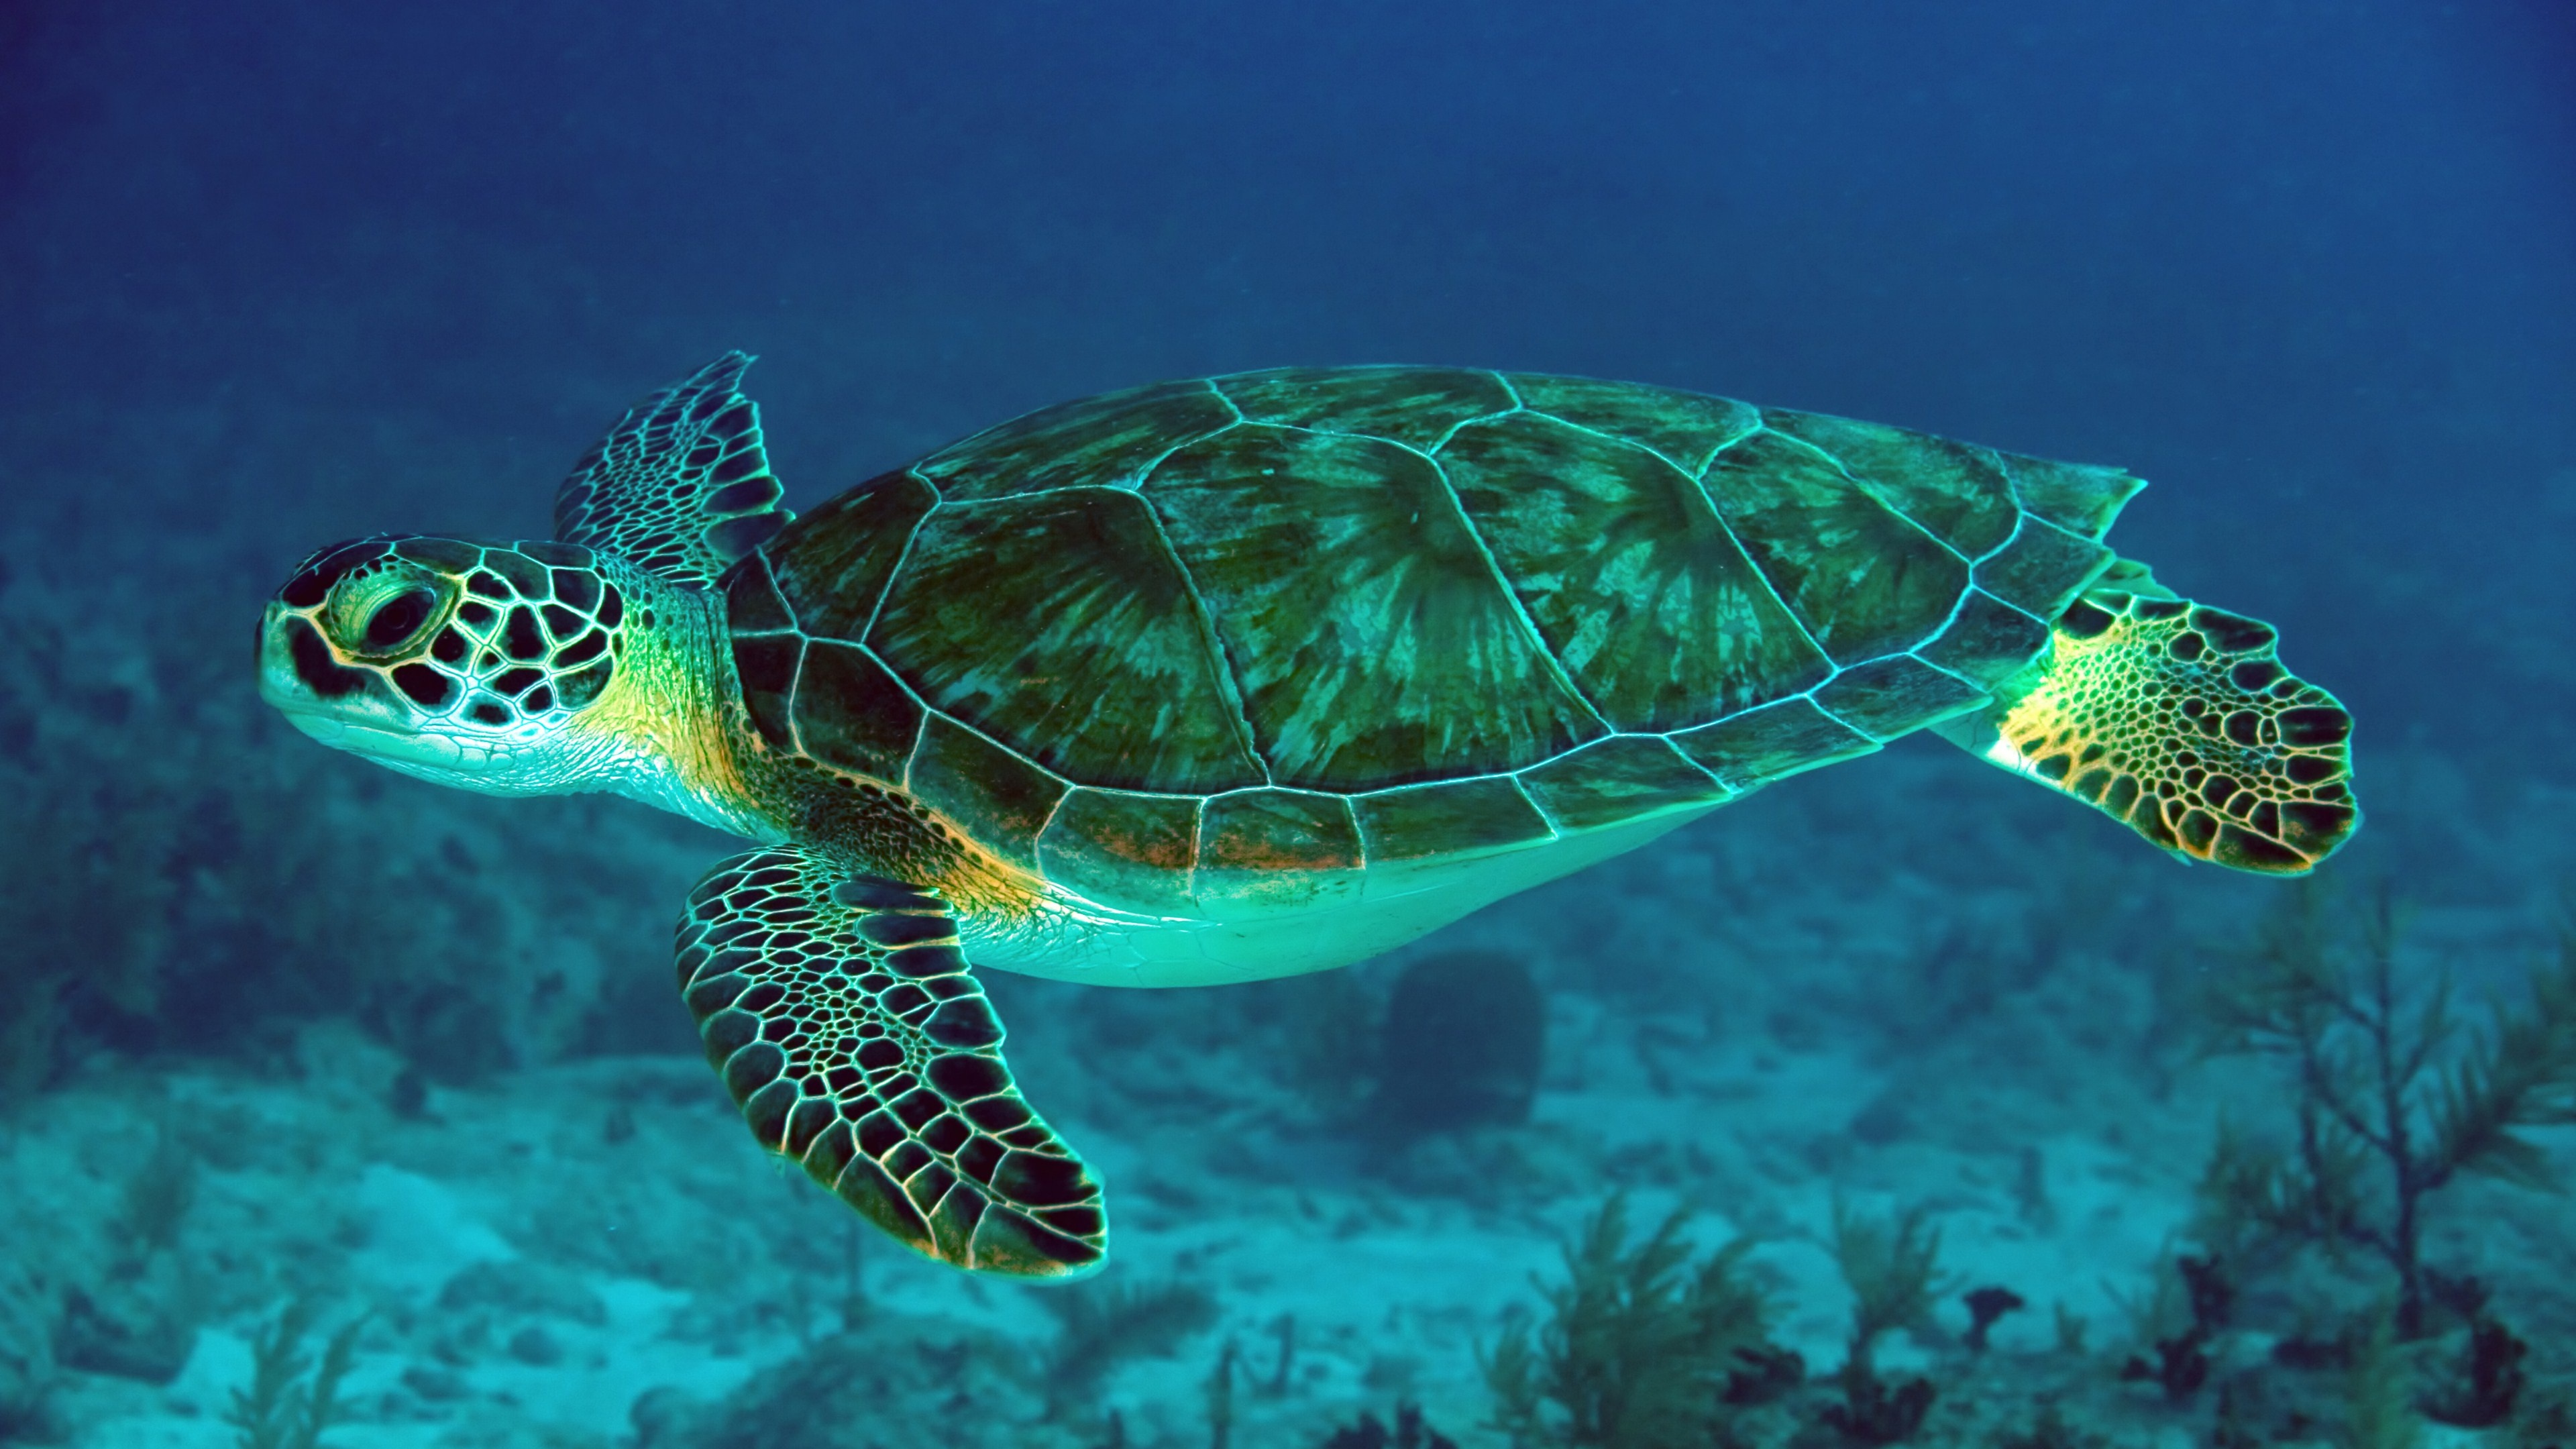 Sea turtle wonder, Breathtaking wallpapers, Marine beauty, Aquatic elegance, 3840x2160 4K Desktop